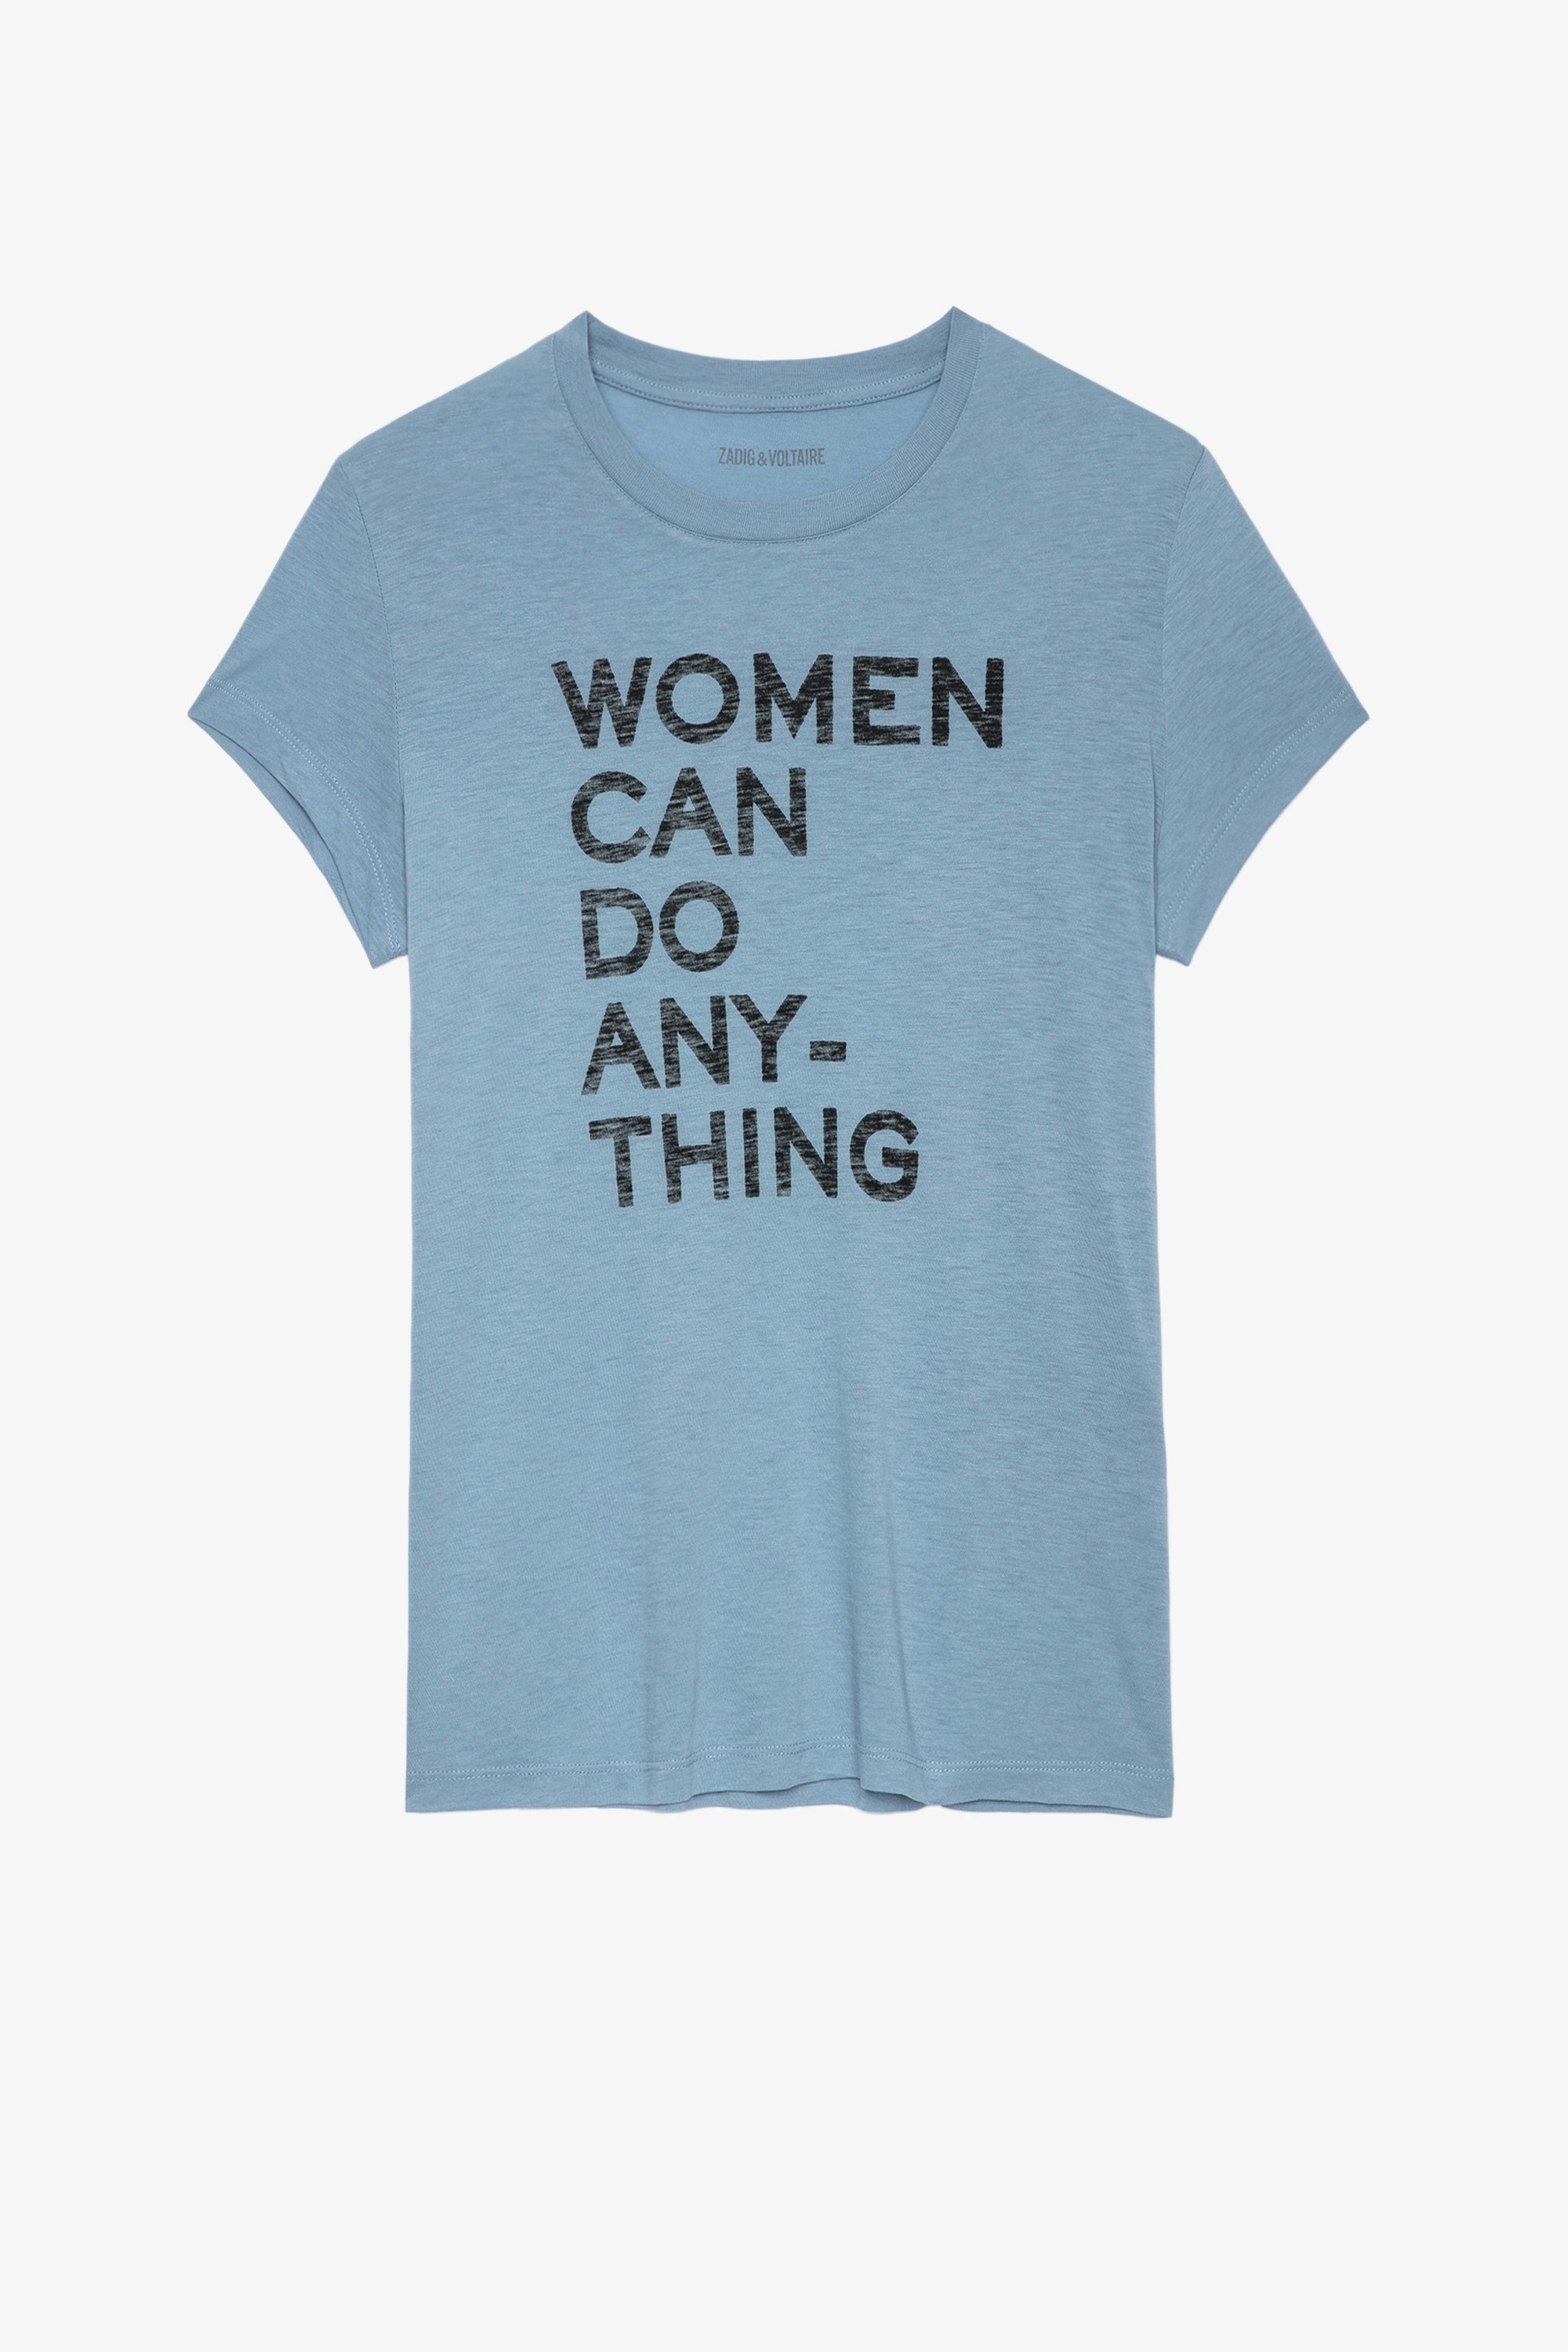 Camiseta Walk Women can do anything Camiseta azul de algodón «Women can do anything» para mujer